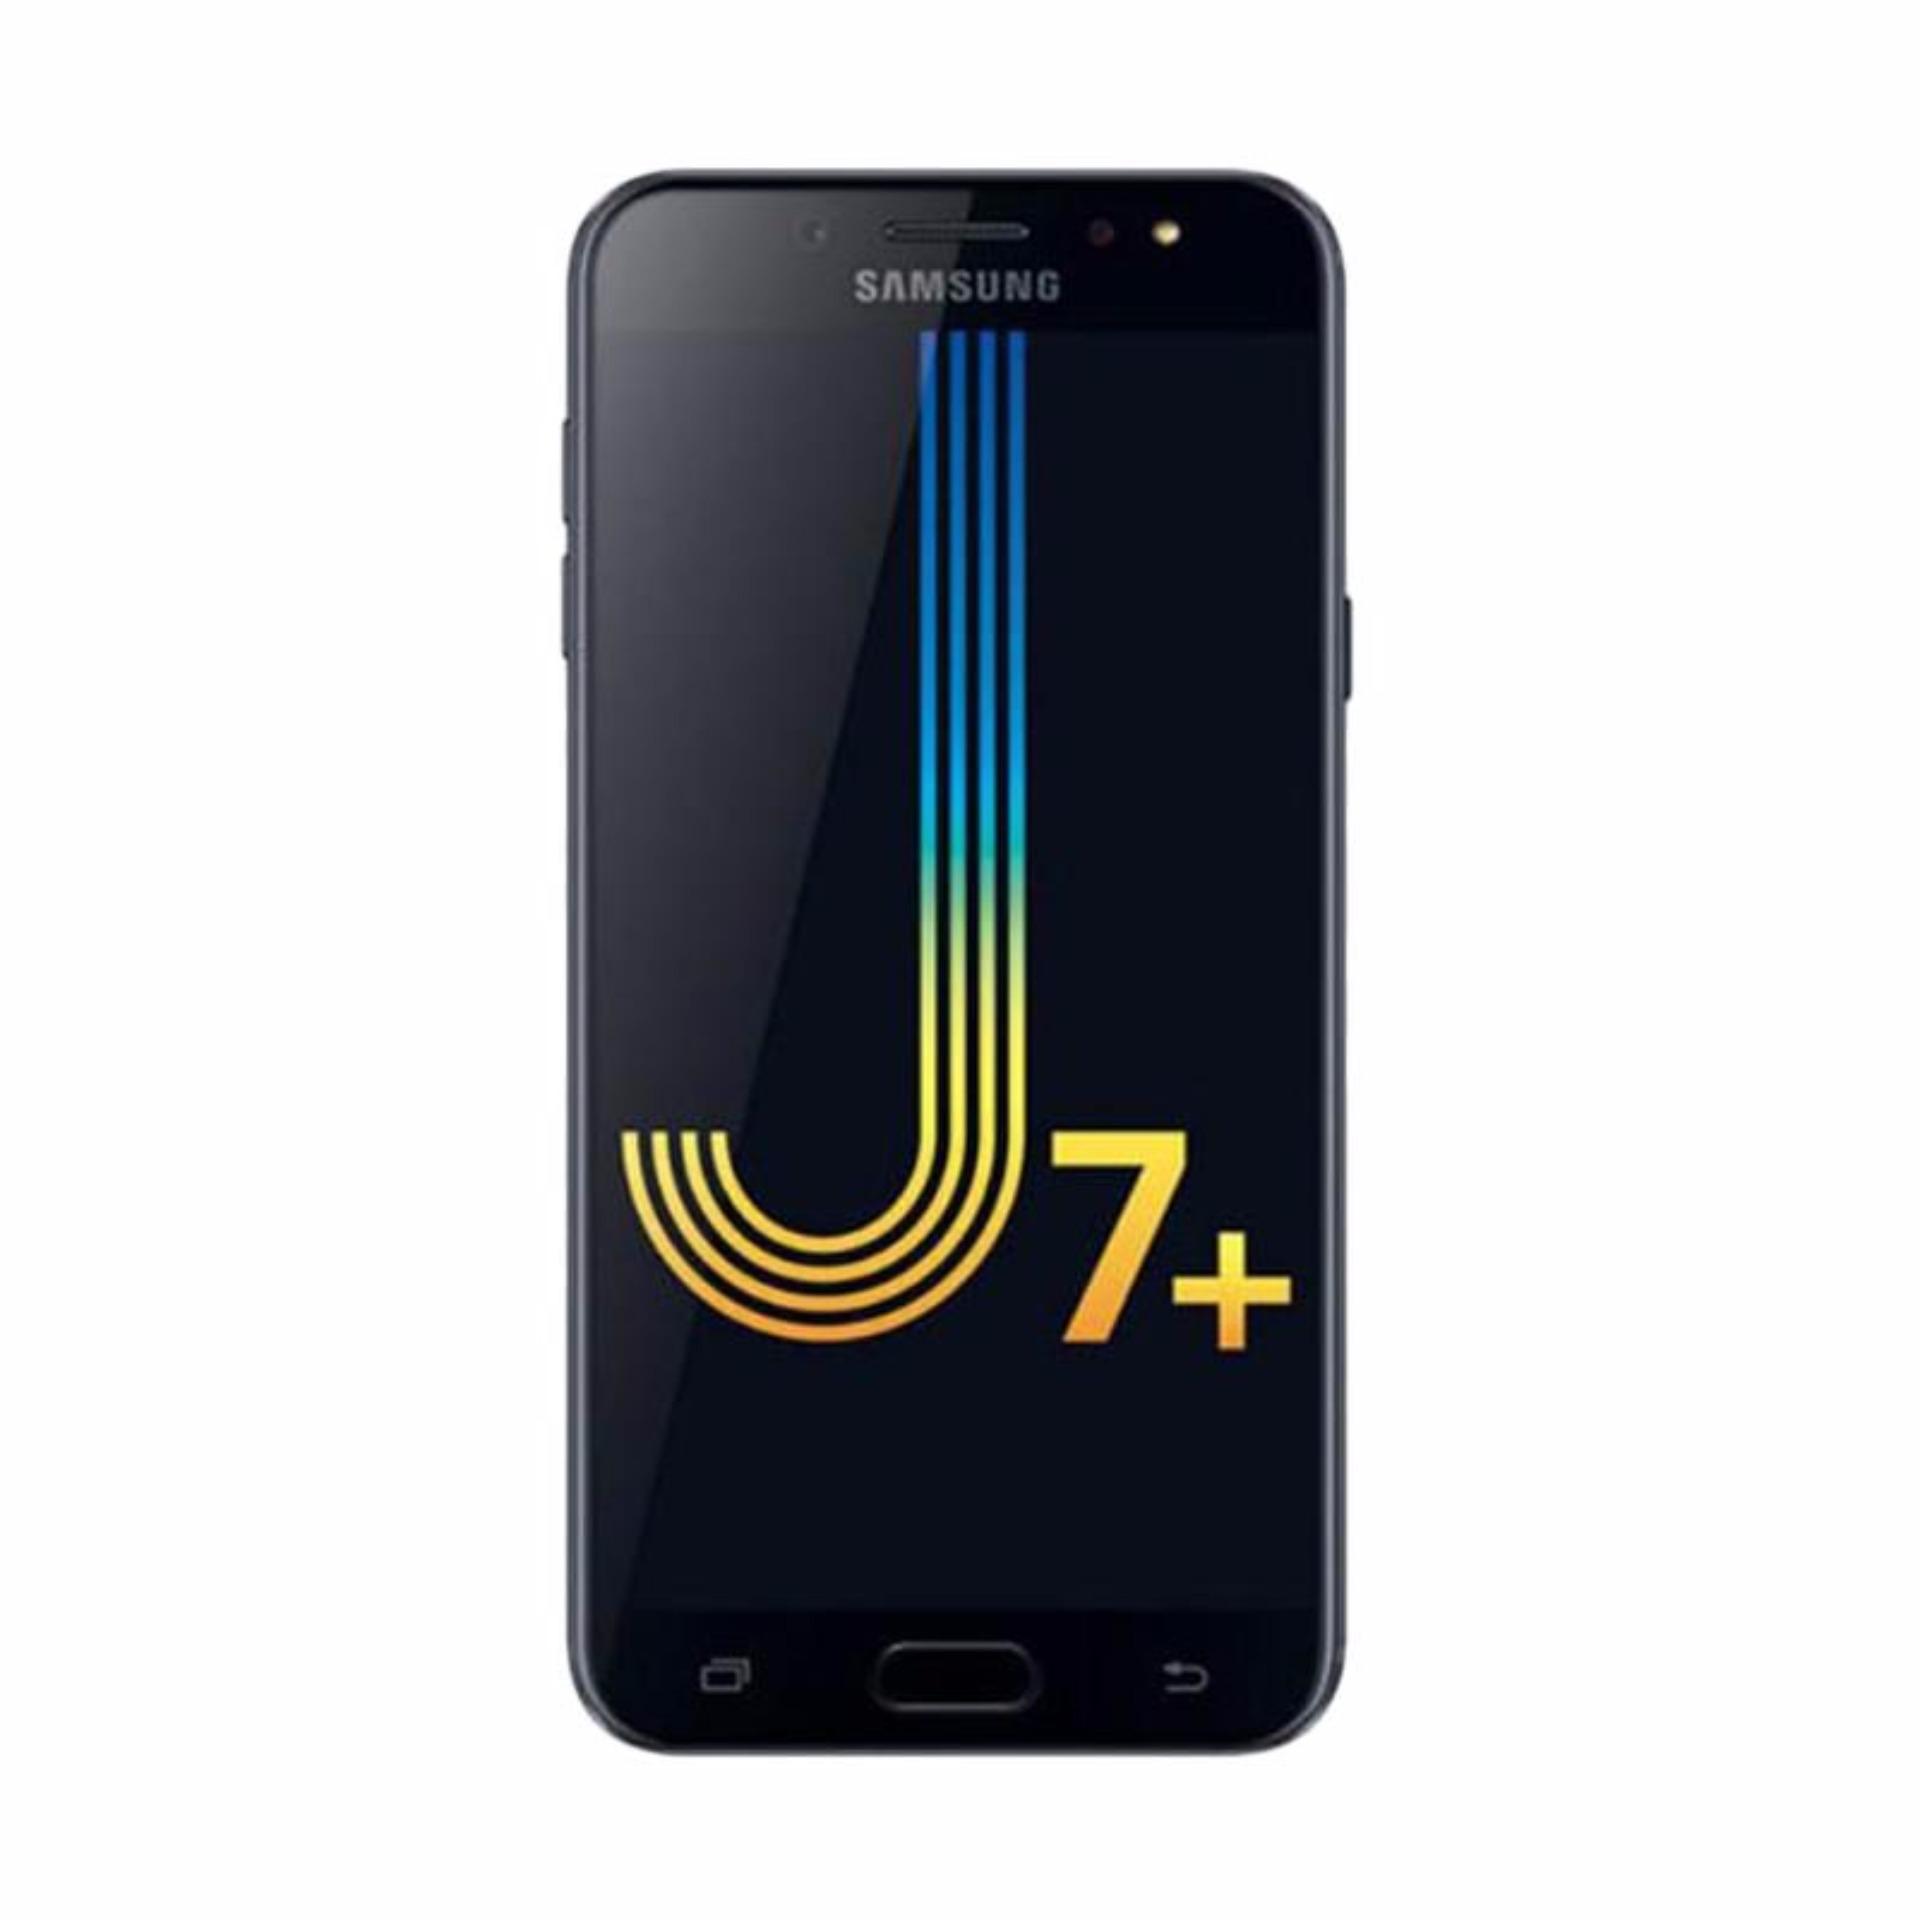 Samsung Galaxy J7 Plus C710 - 4/32 GB - 4G LTE - Black